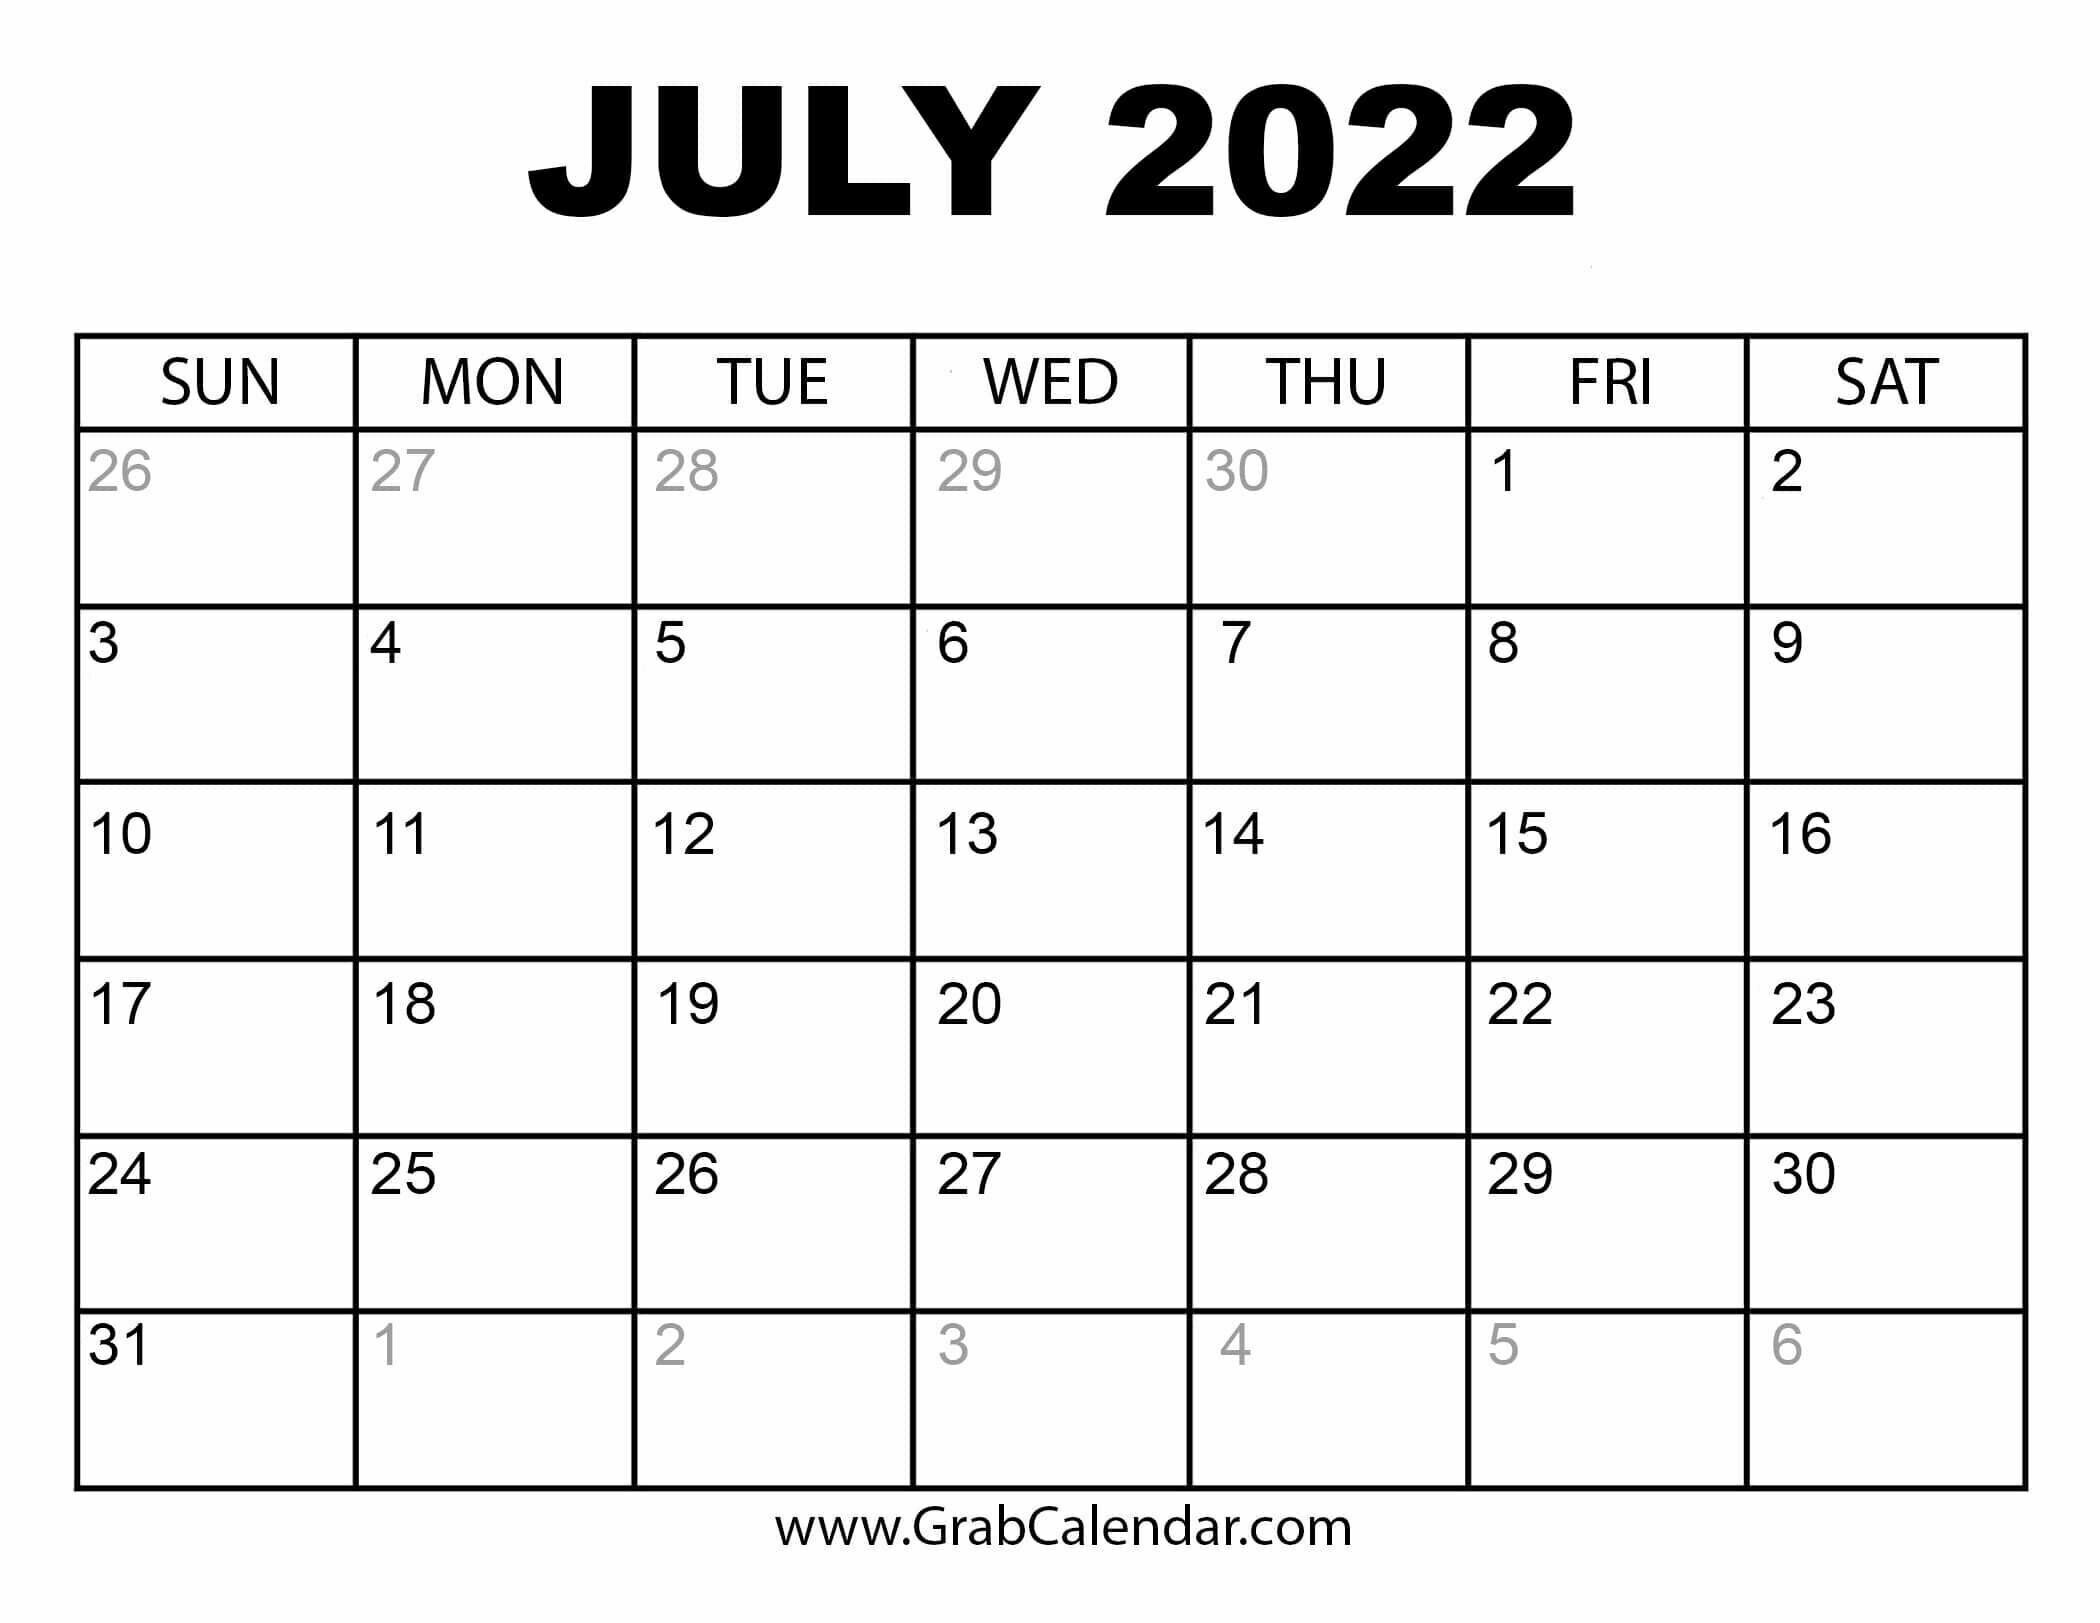 Avatar: July 2022 Calendar